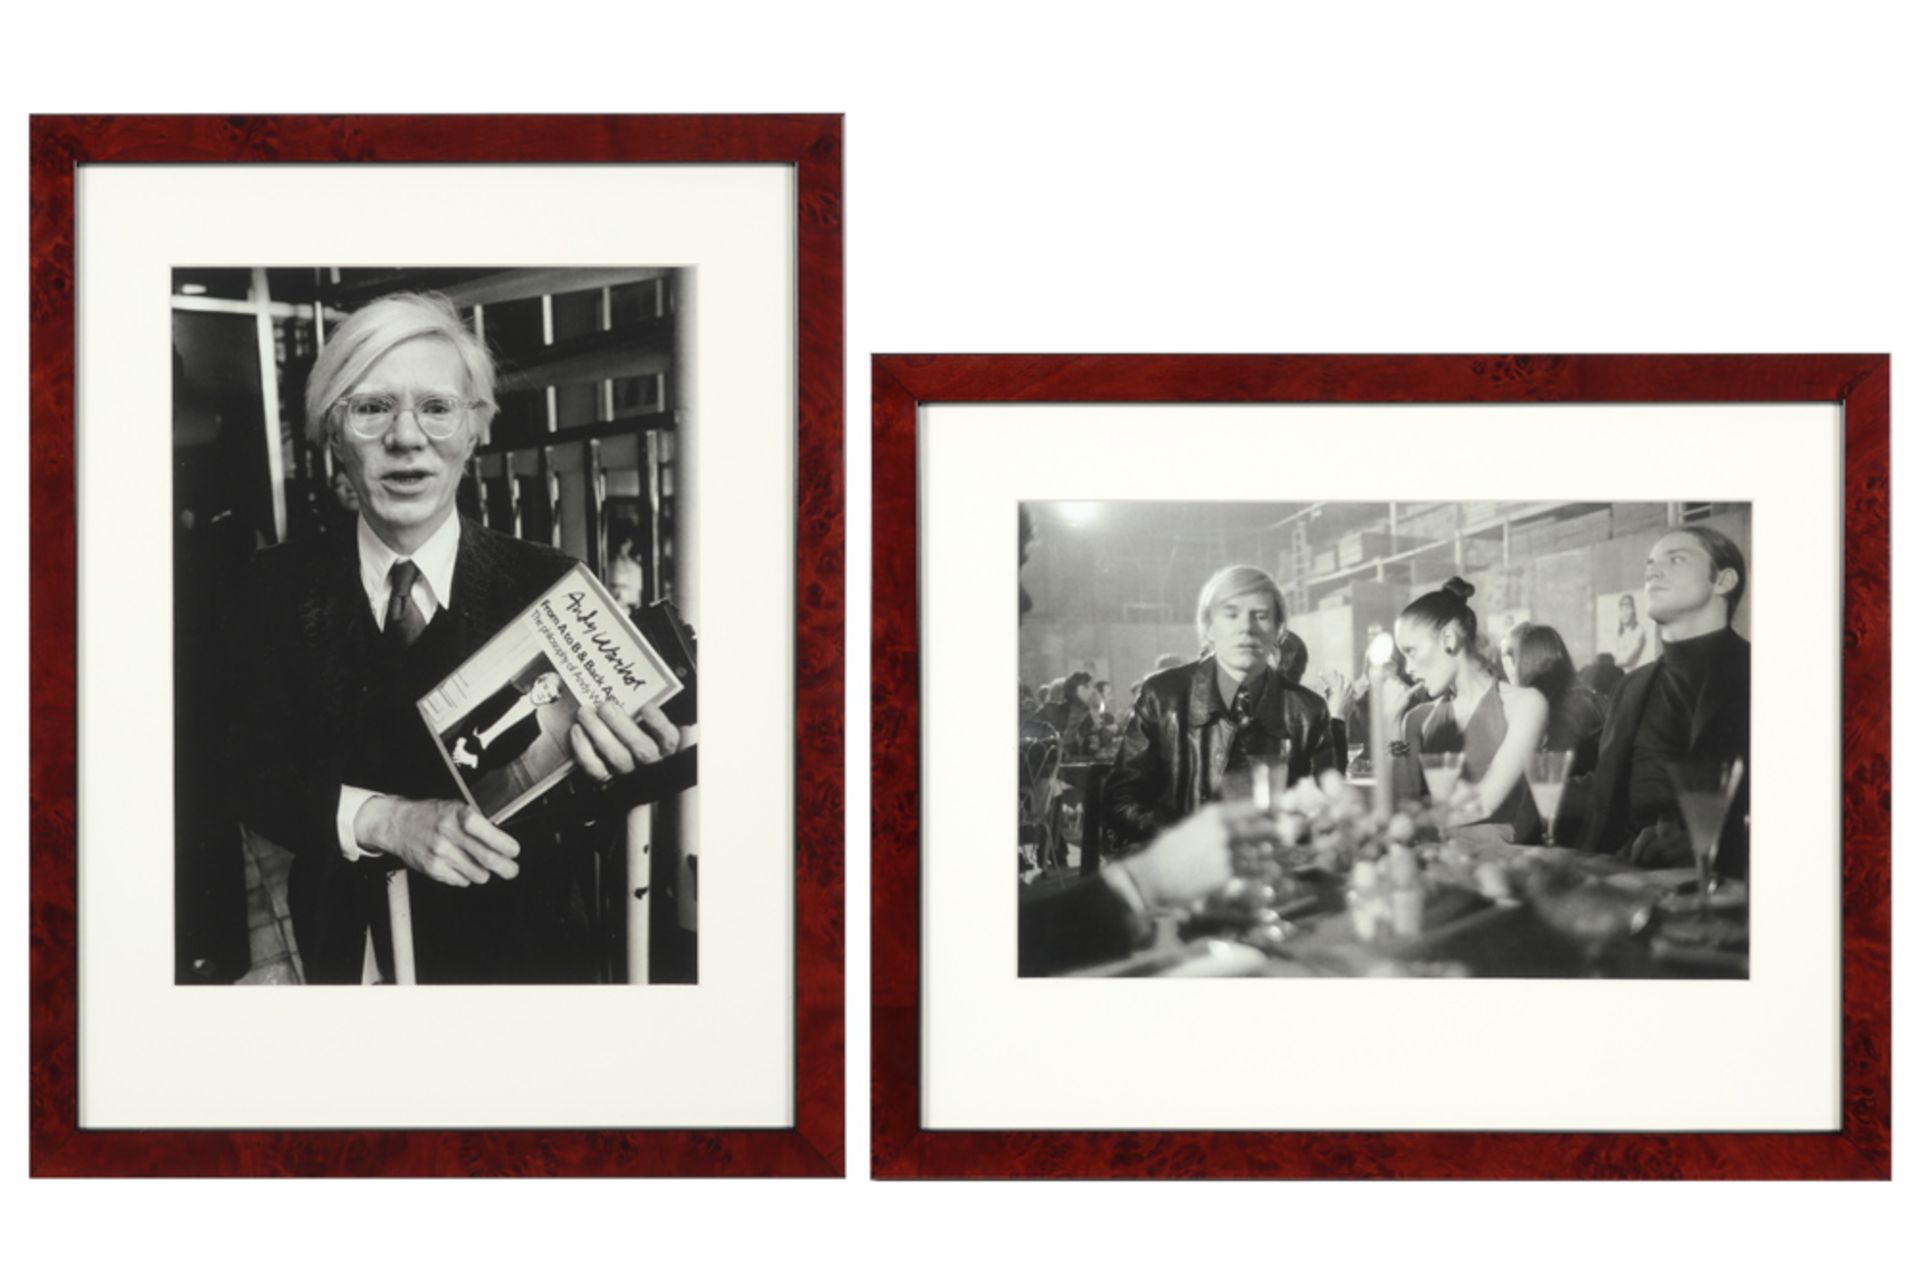 two photoprints in black and white of Andy Warhol || Twee fotoprints in zwart-wit met archiefbeelden